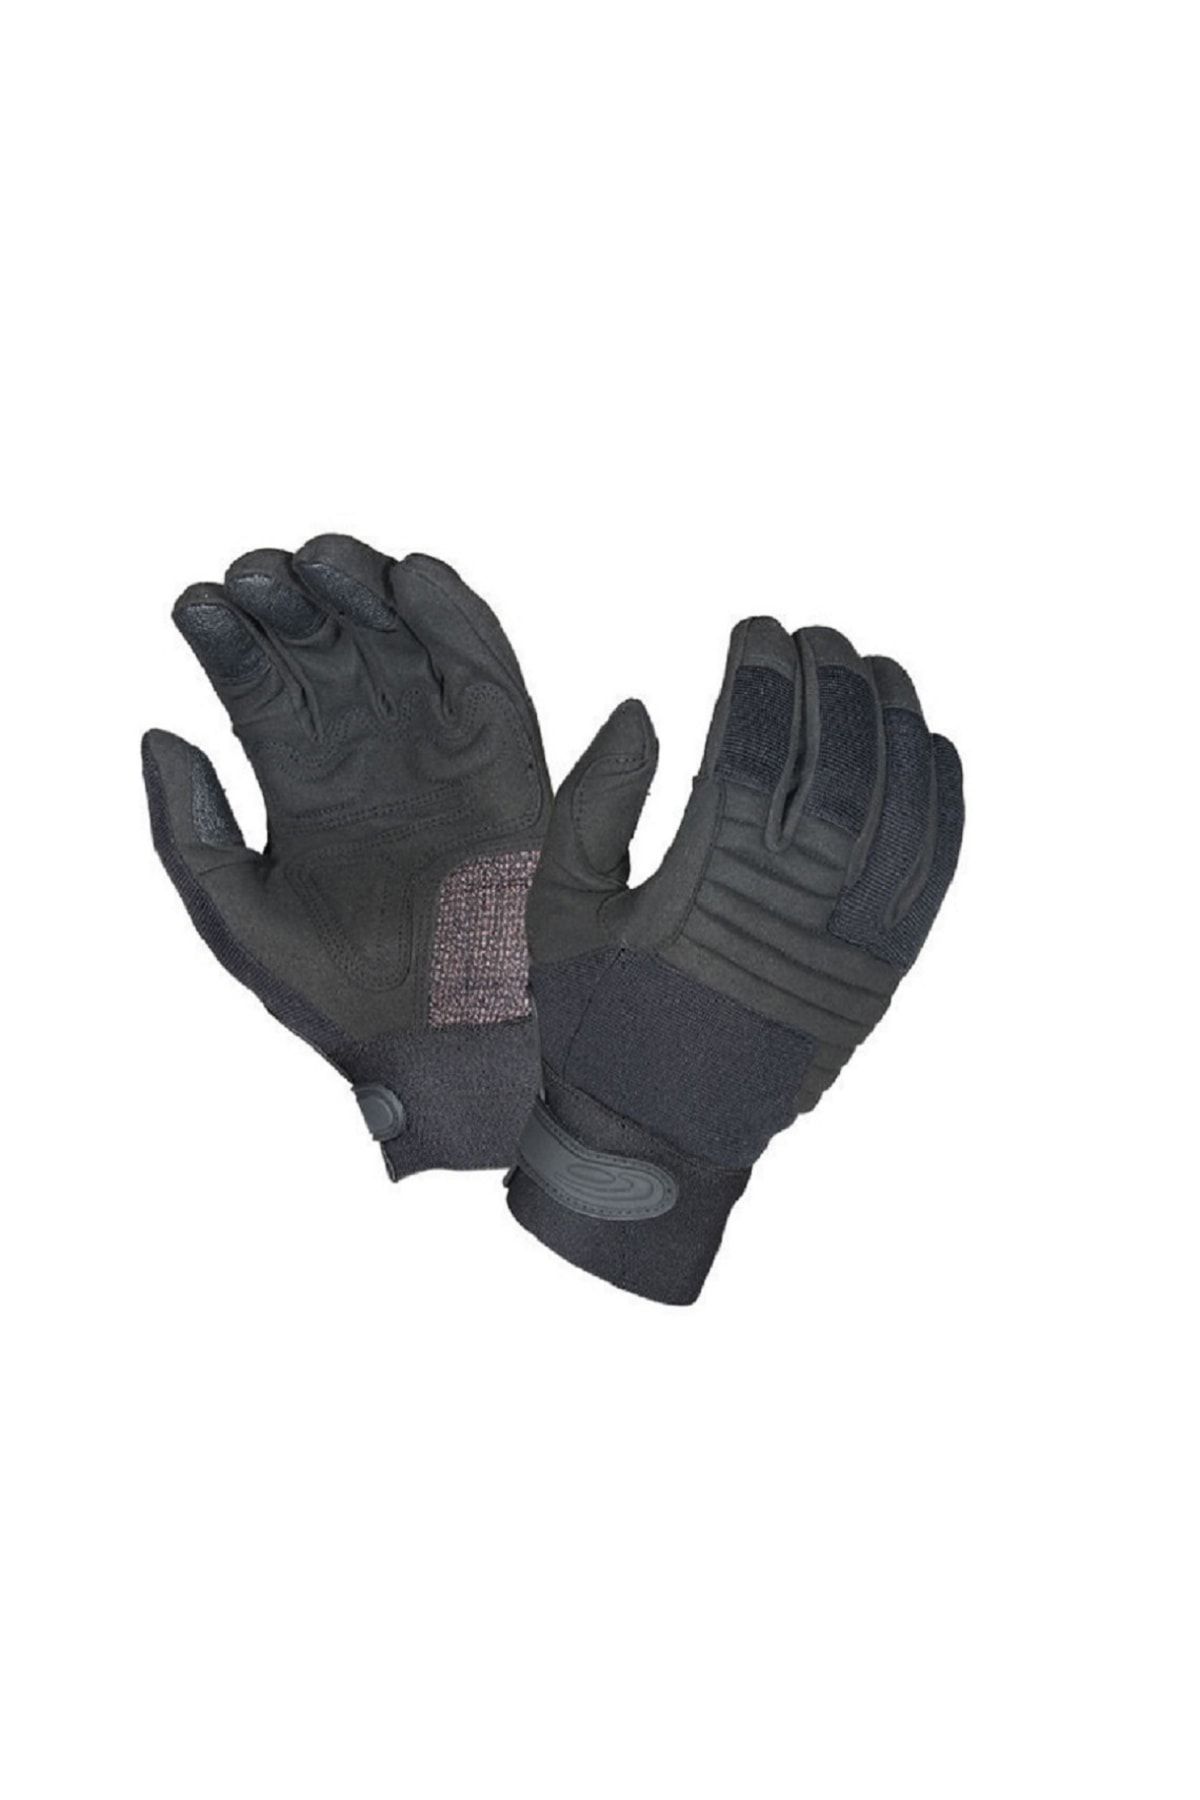 3M Hatch Hmg100 Tactical Mechanics Gloves Eldiven Medium